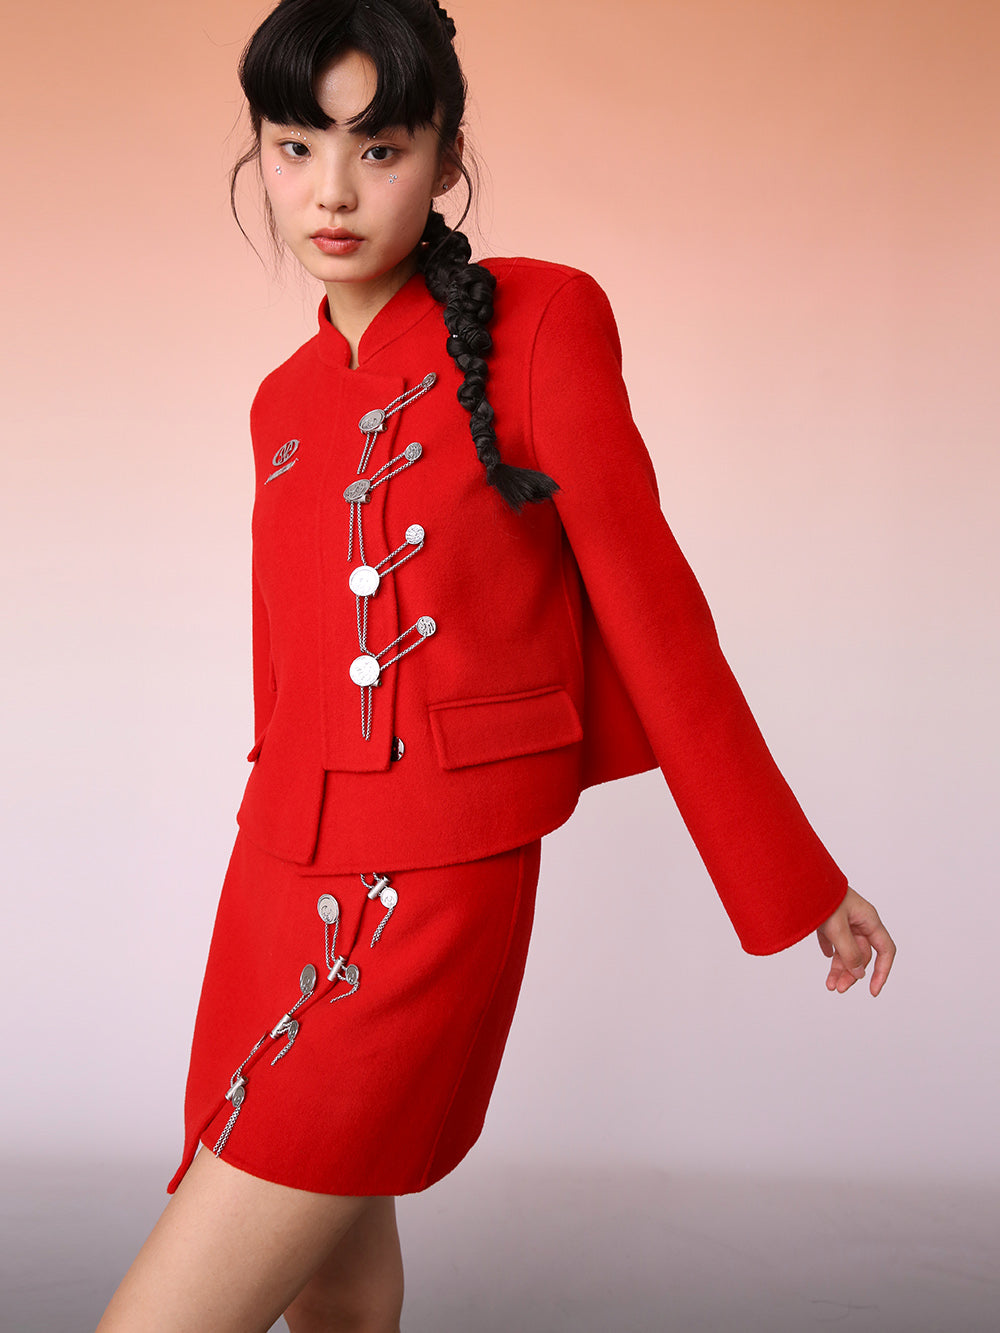 MUKZIN Retro Style Red Original Slim Fashion Coat